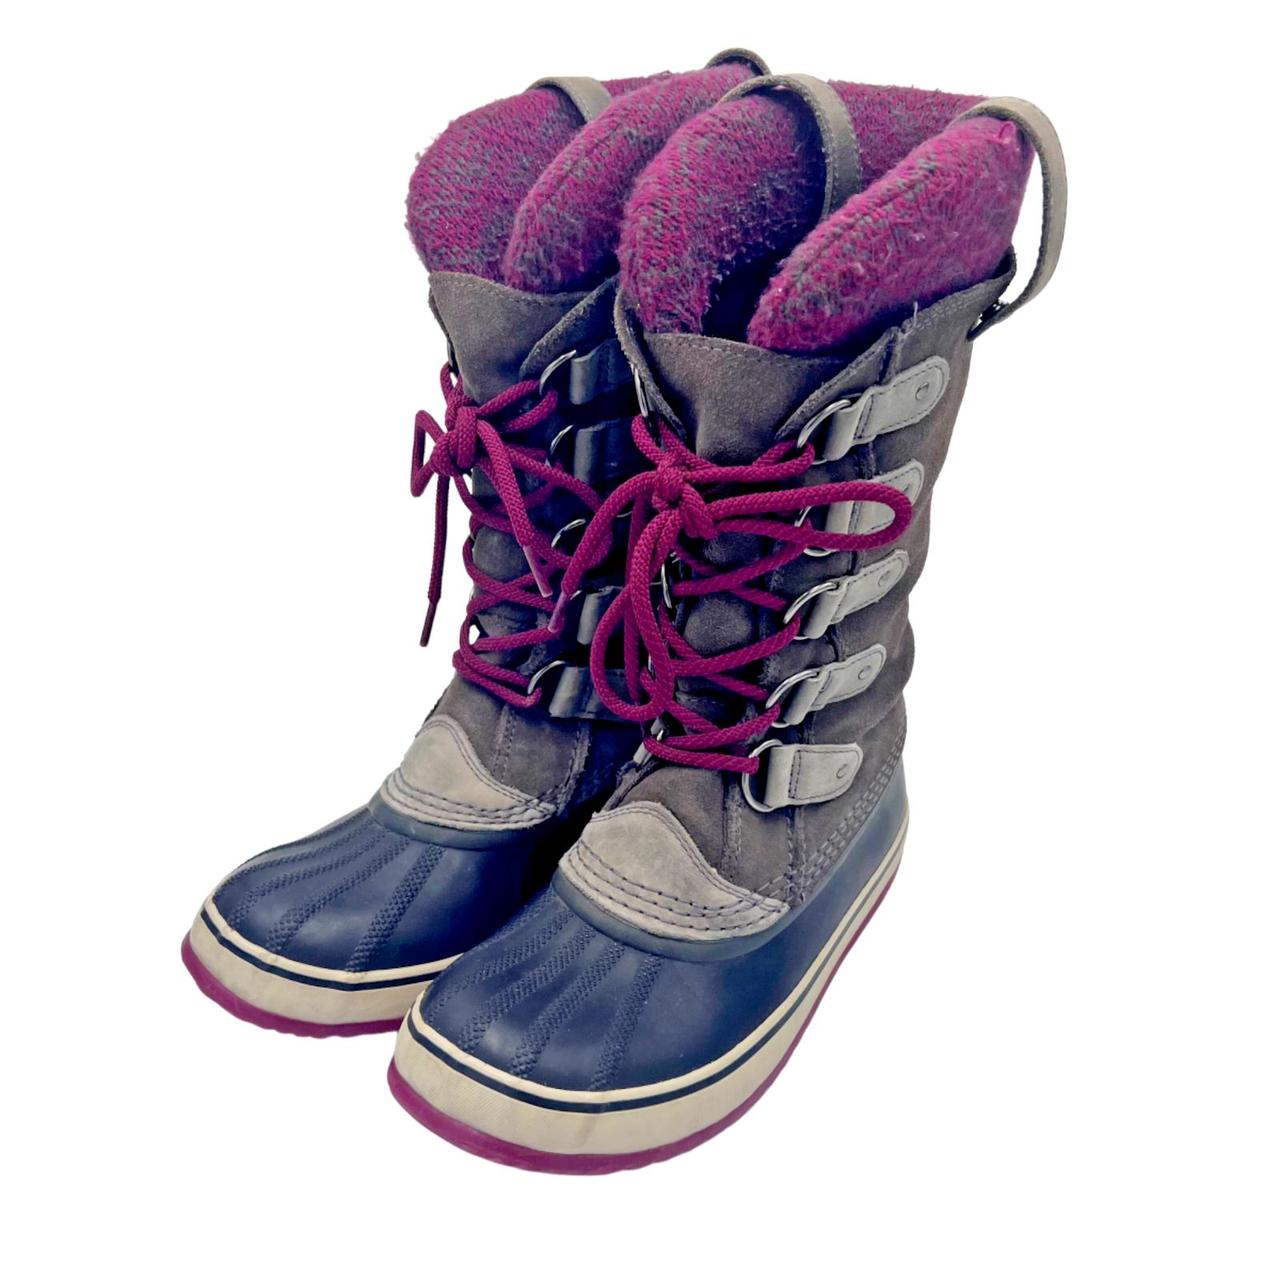 Sorel Women's Grey and Purple Boots